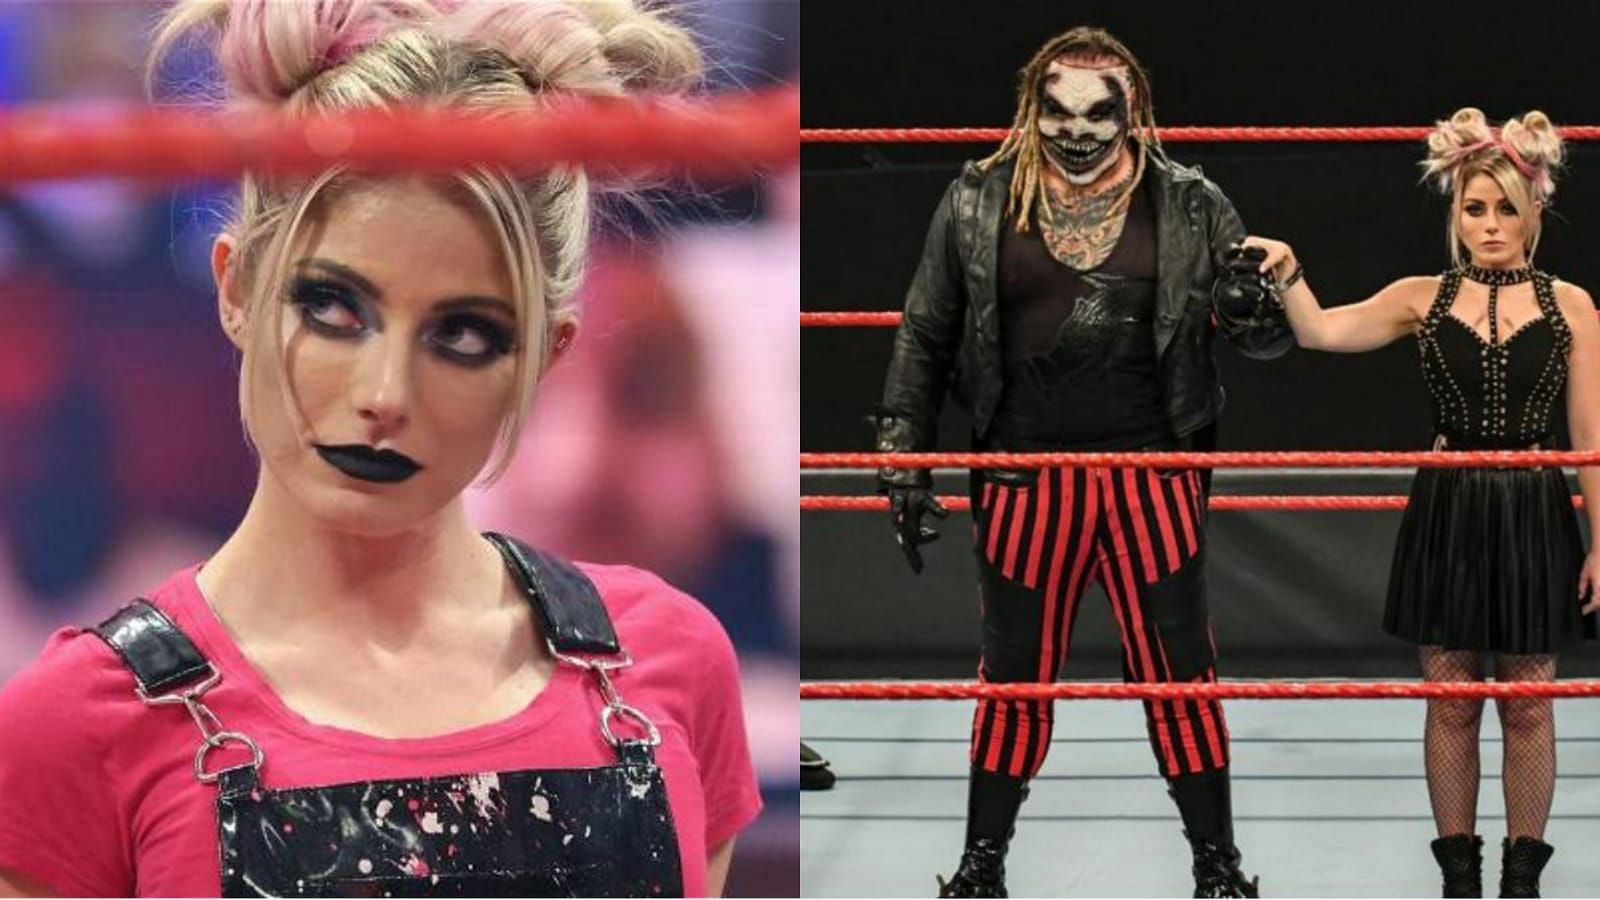 Bray Wyatt and Alexa Bliss: What did Bray Wyatt tell Alexa Bliss